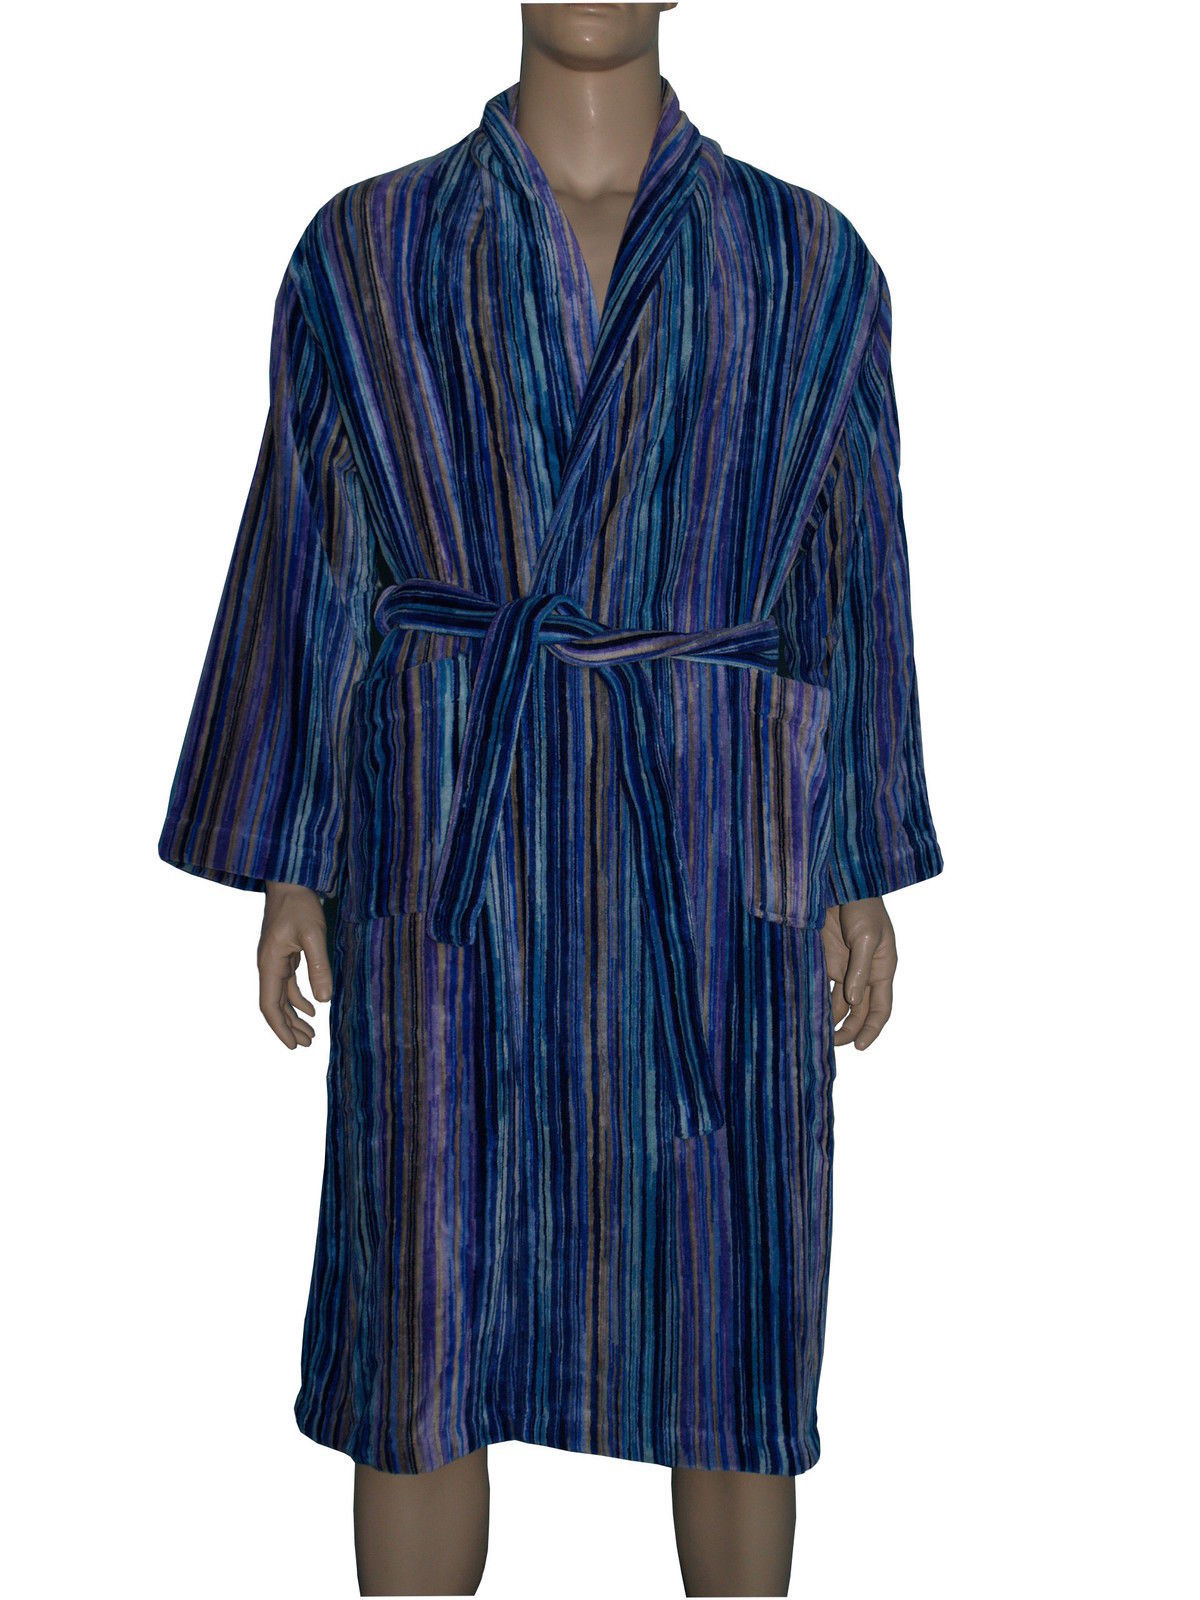 Missoni Striped Medium or Large Shawl Collar Bath Robe - Blue, Purple ...